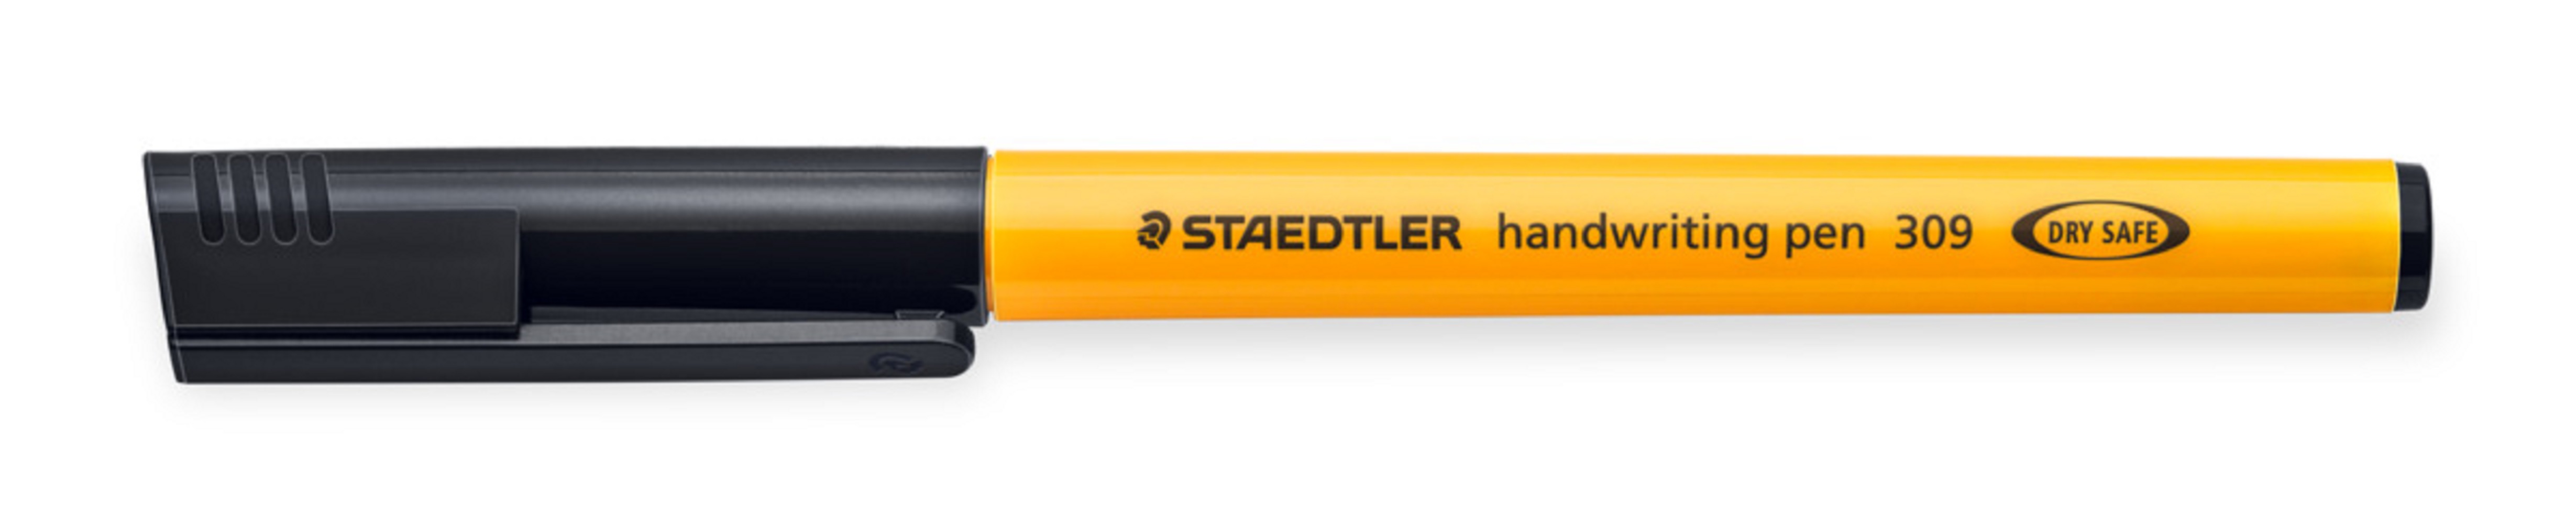 Staedtler Handwriting Pen Black P 50